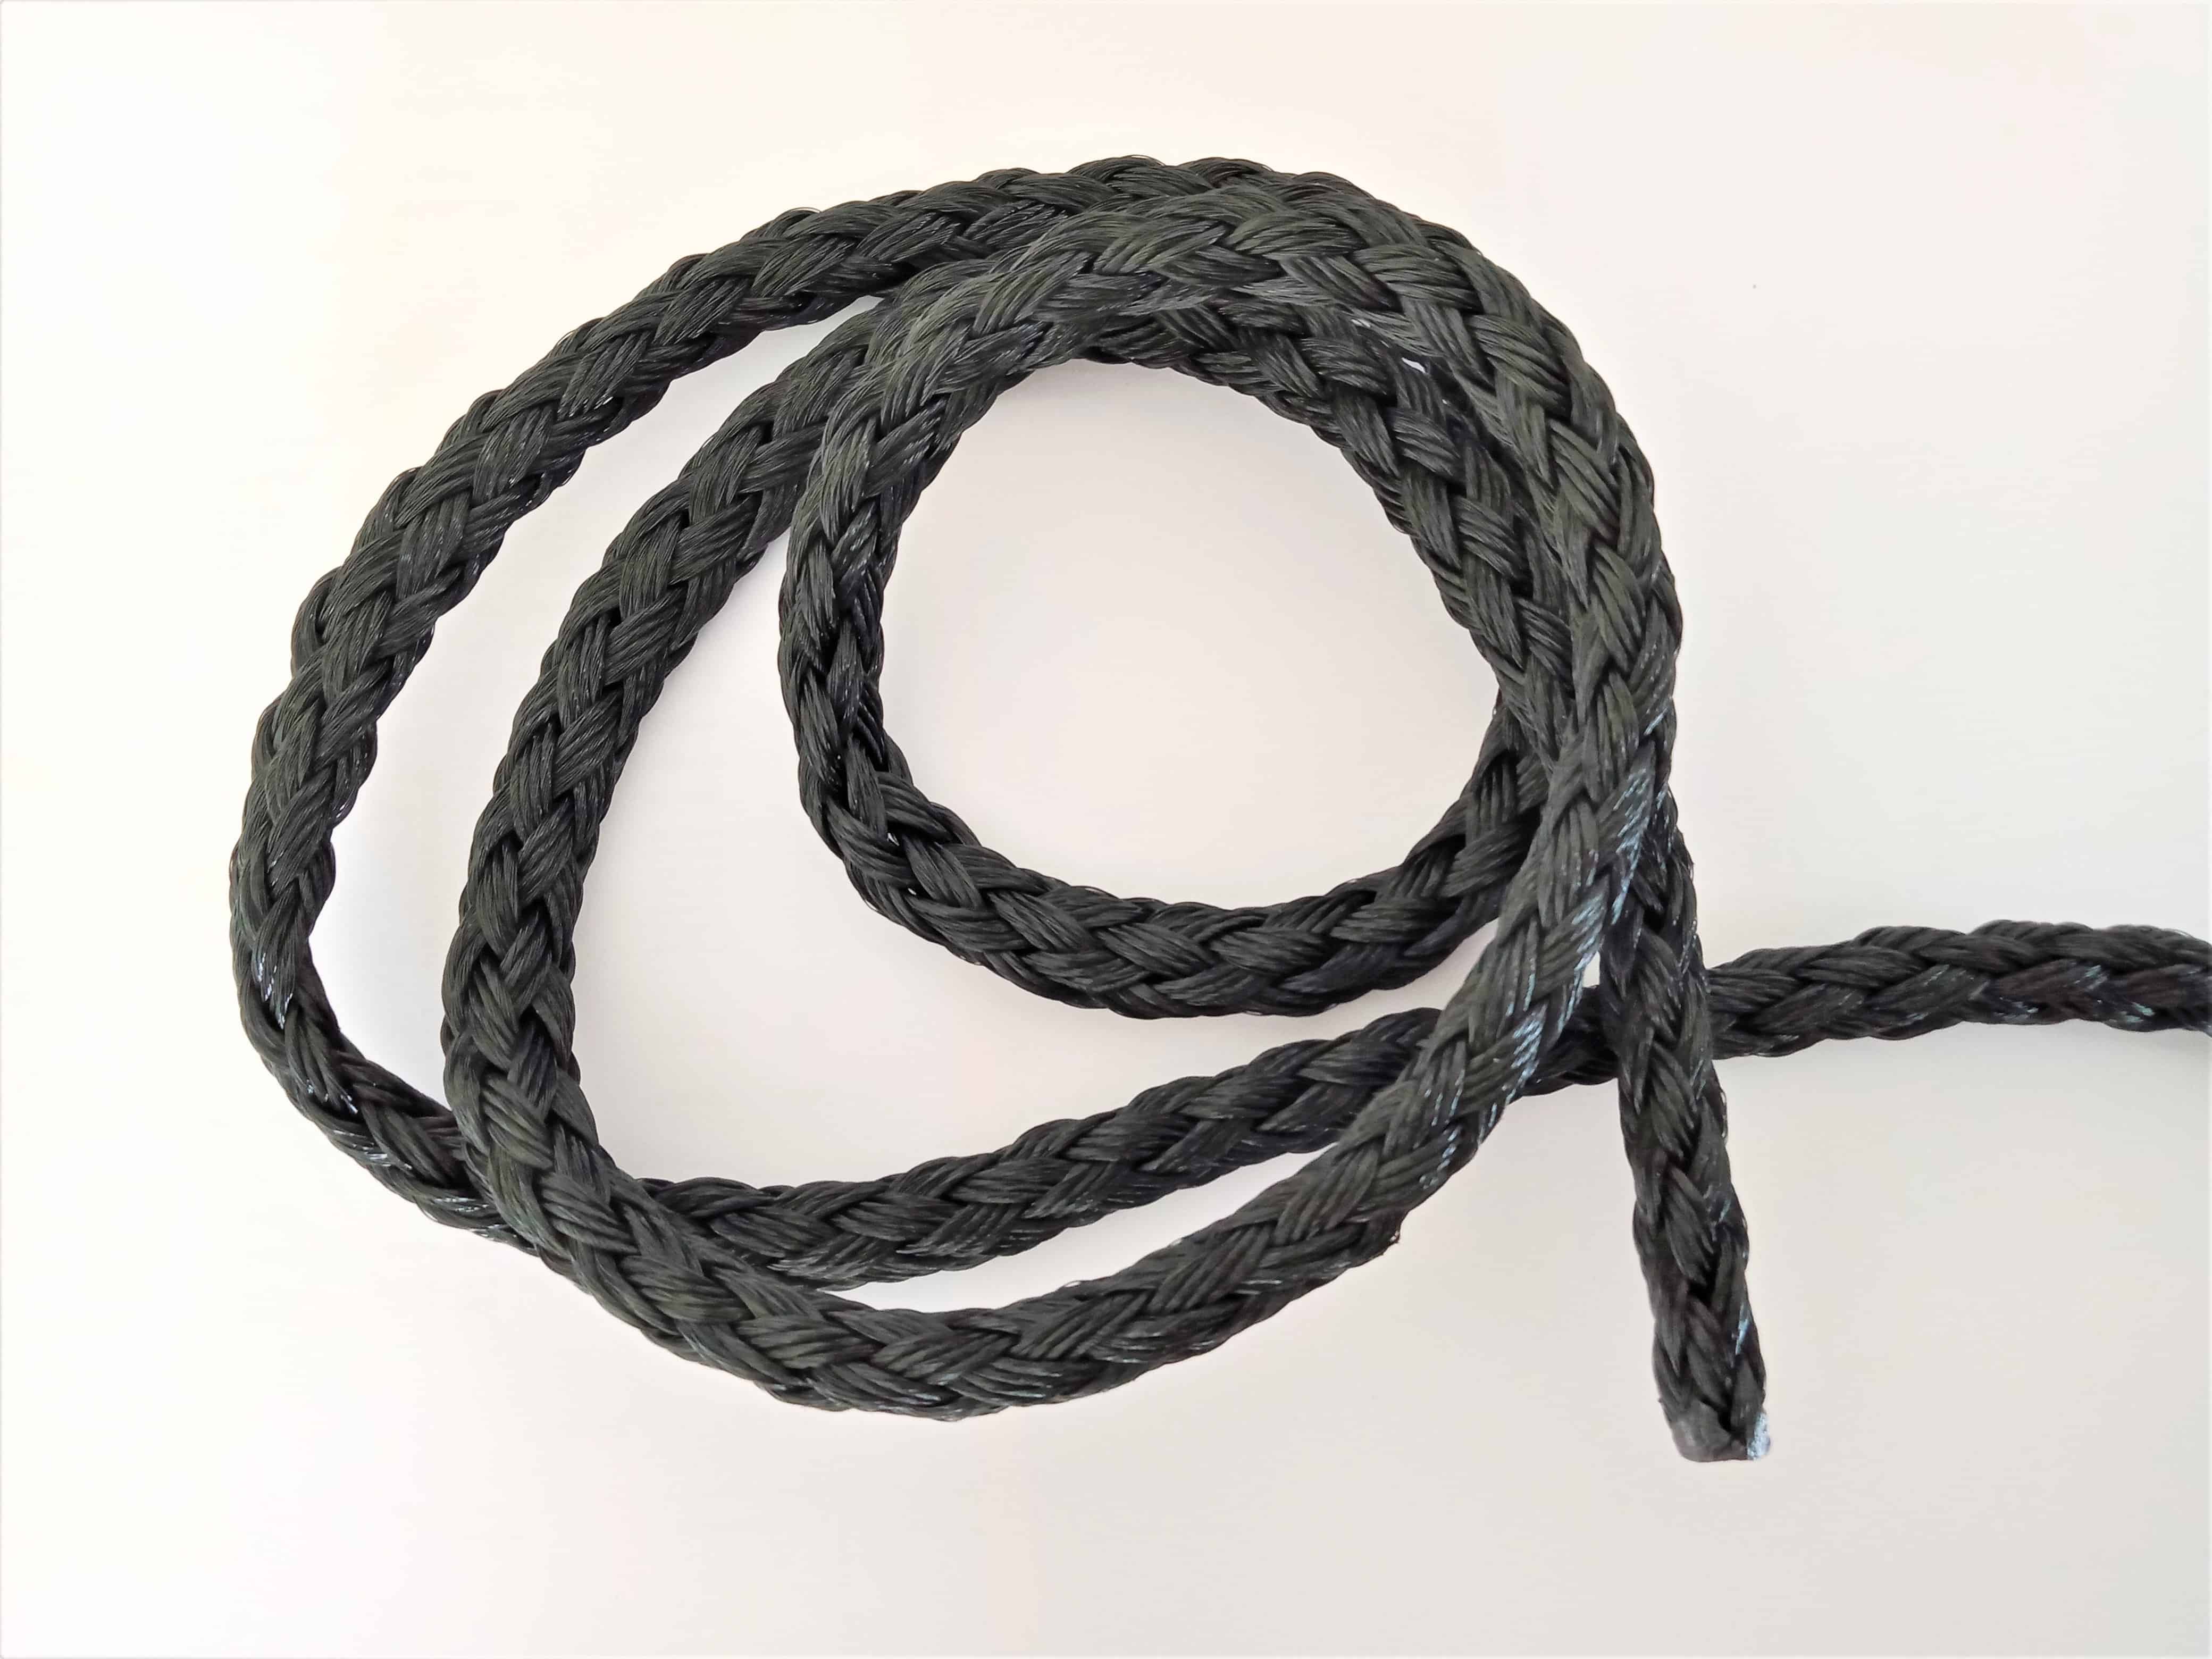 Nautilus Belly Strap Rope - Black (per meter)